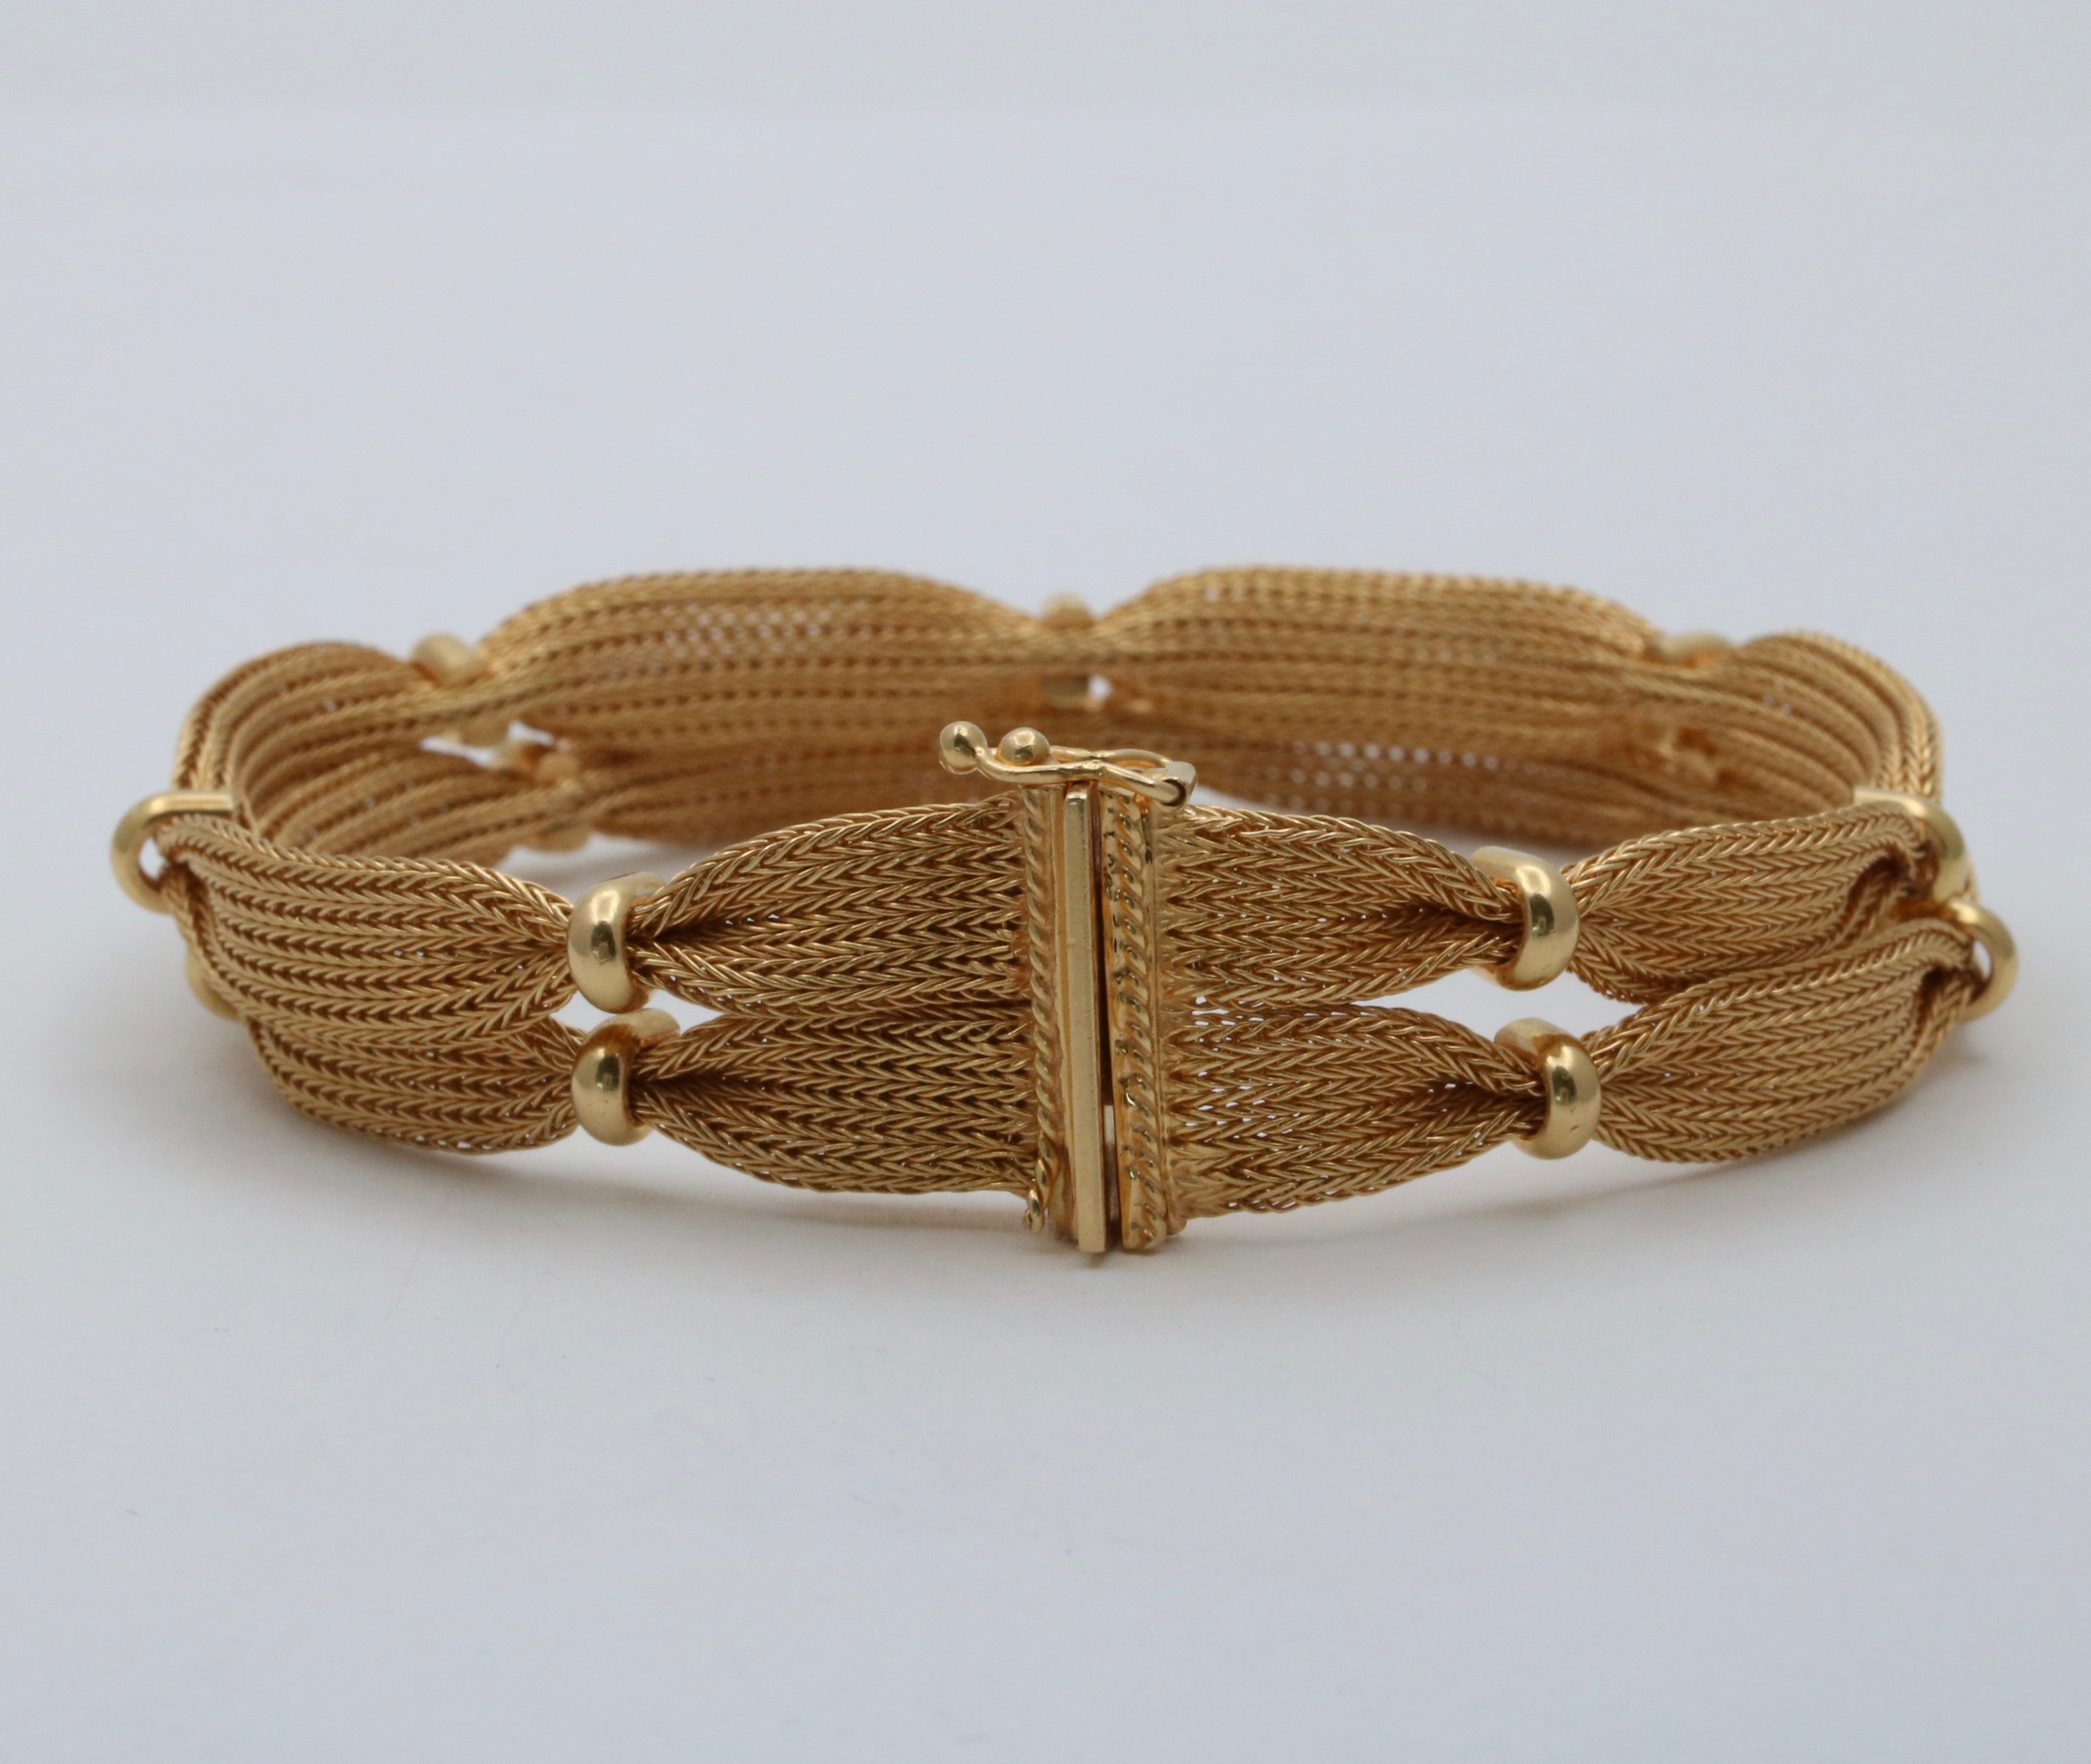 necklace and bracelet made of woven gold : Galerie Slavik